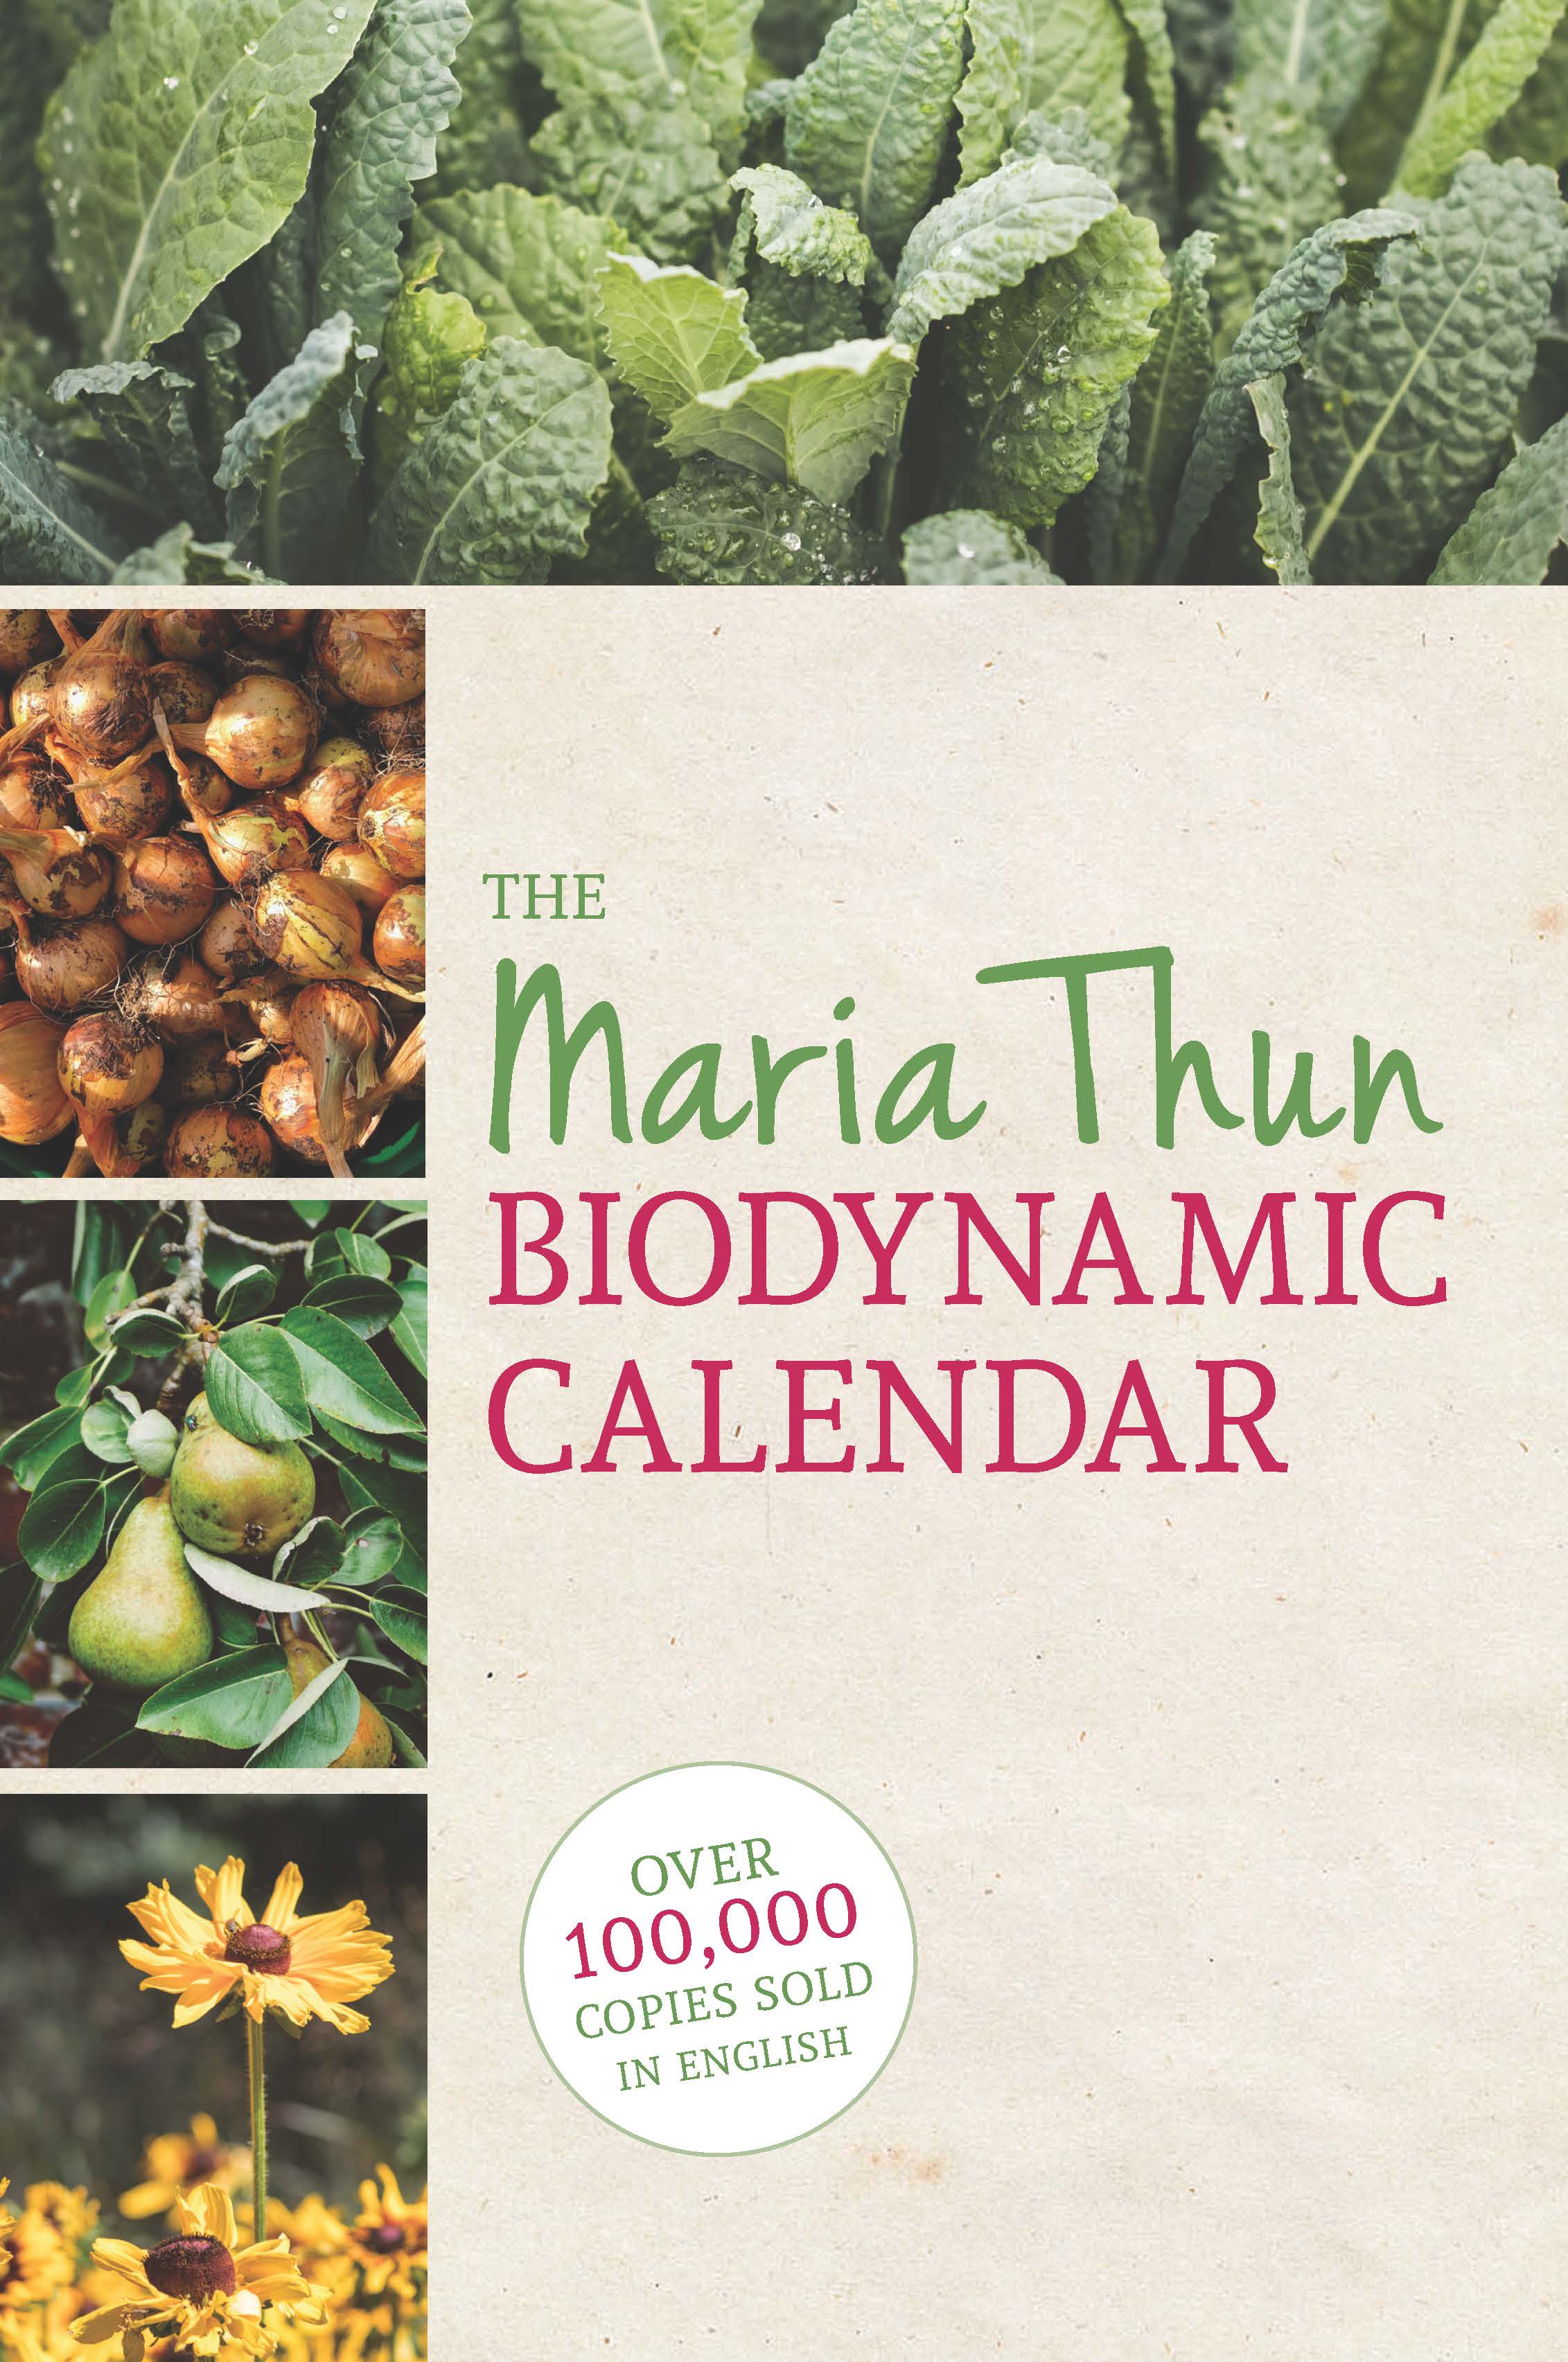 The Maria Thun Biodynamic Calendar cover image